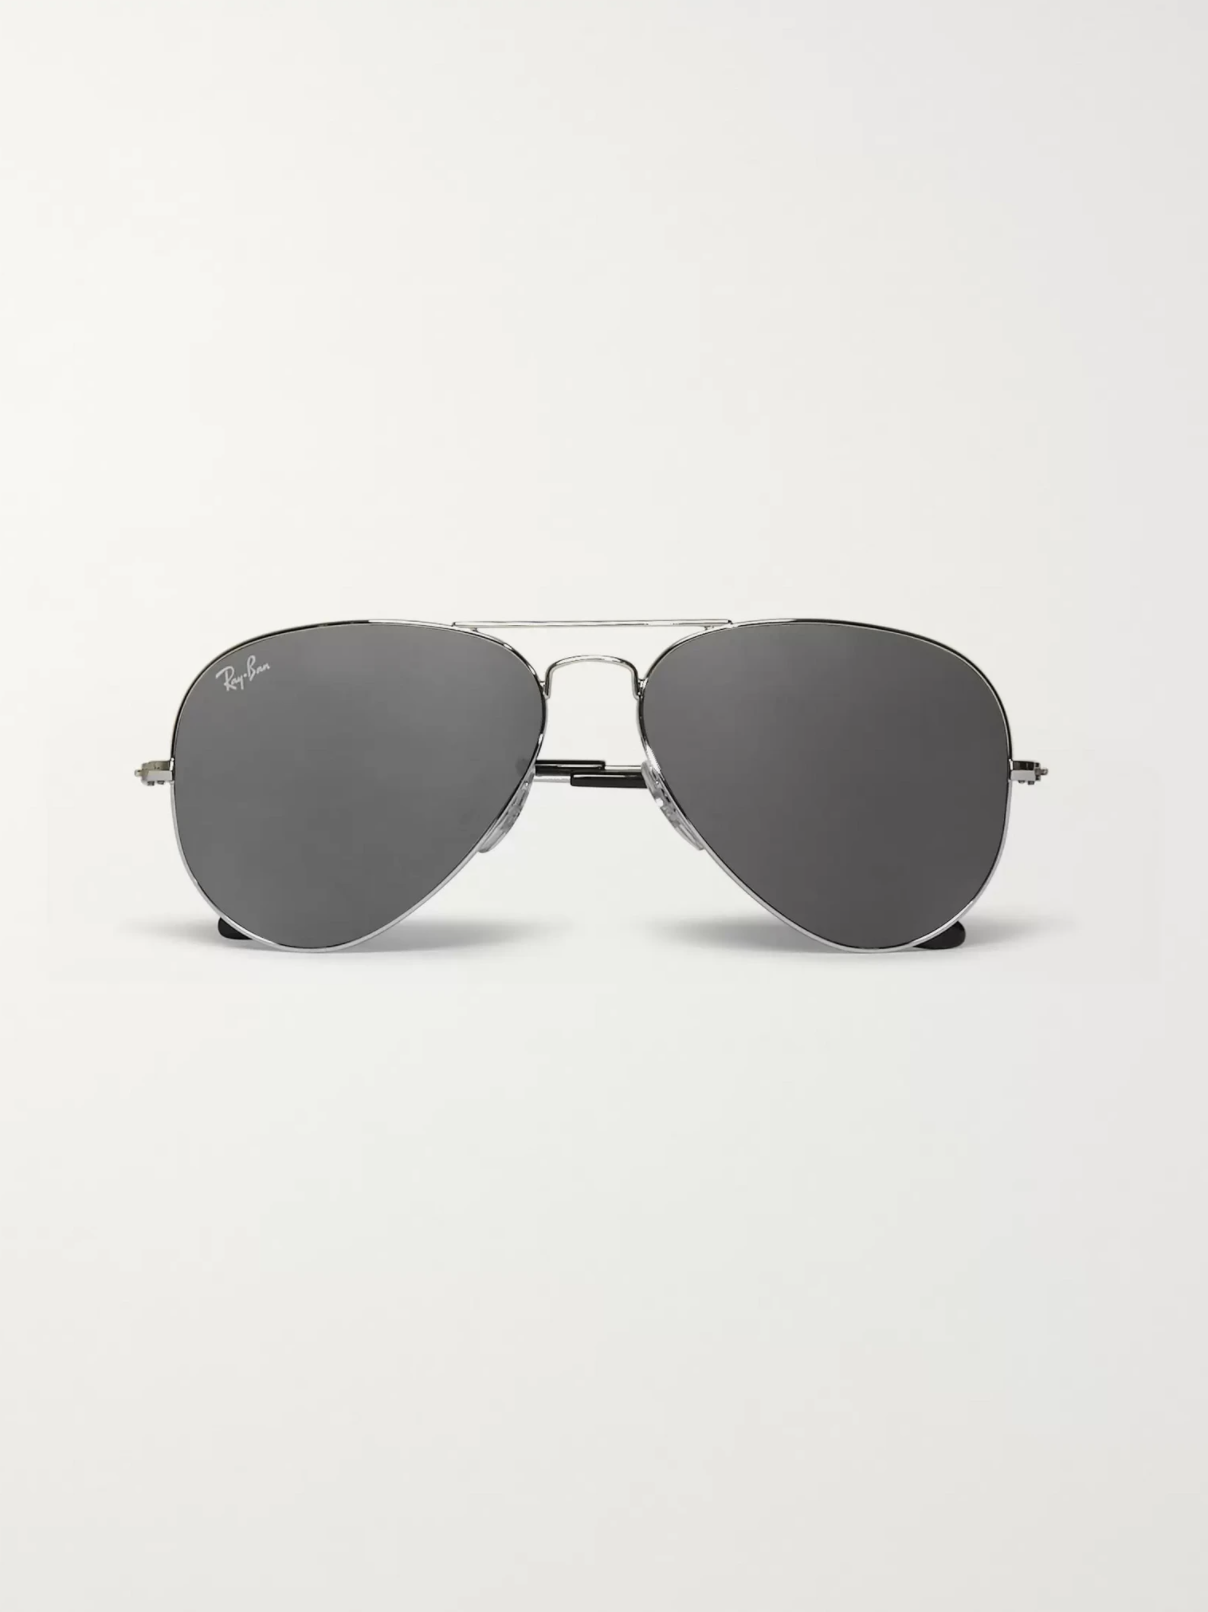 Ray-Ban Aviator Silver-Tone Sunglasses